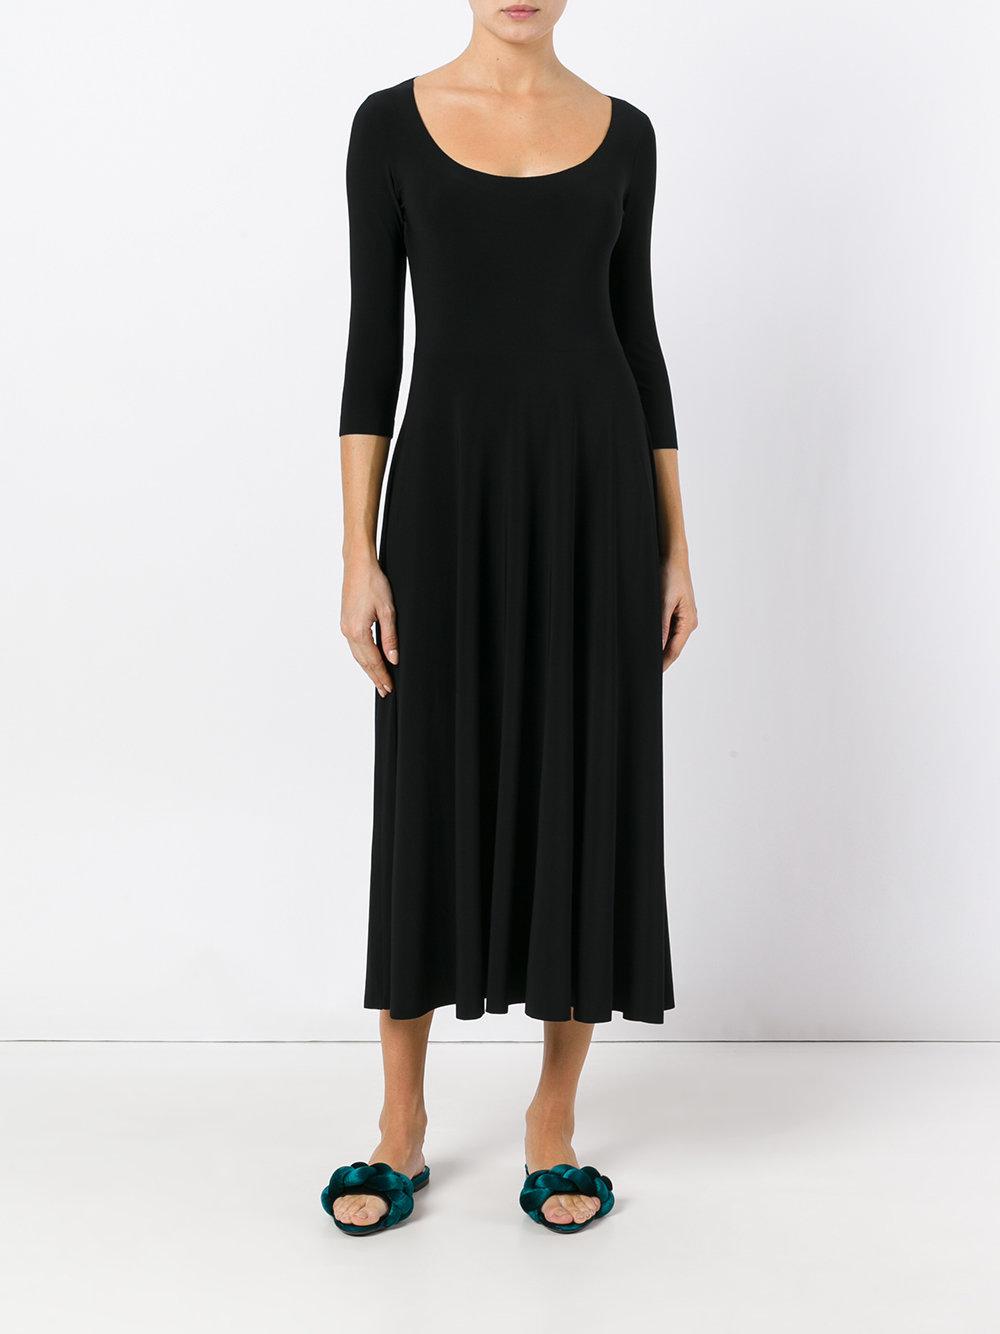 Norma Kamali Synthetic Scoop Neck Midi Dress in Black - Lyst